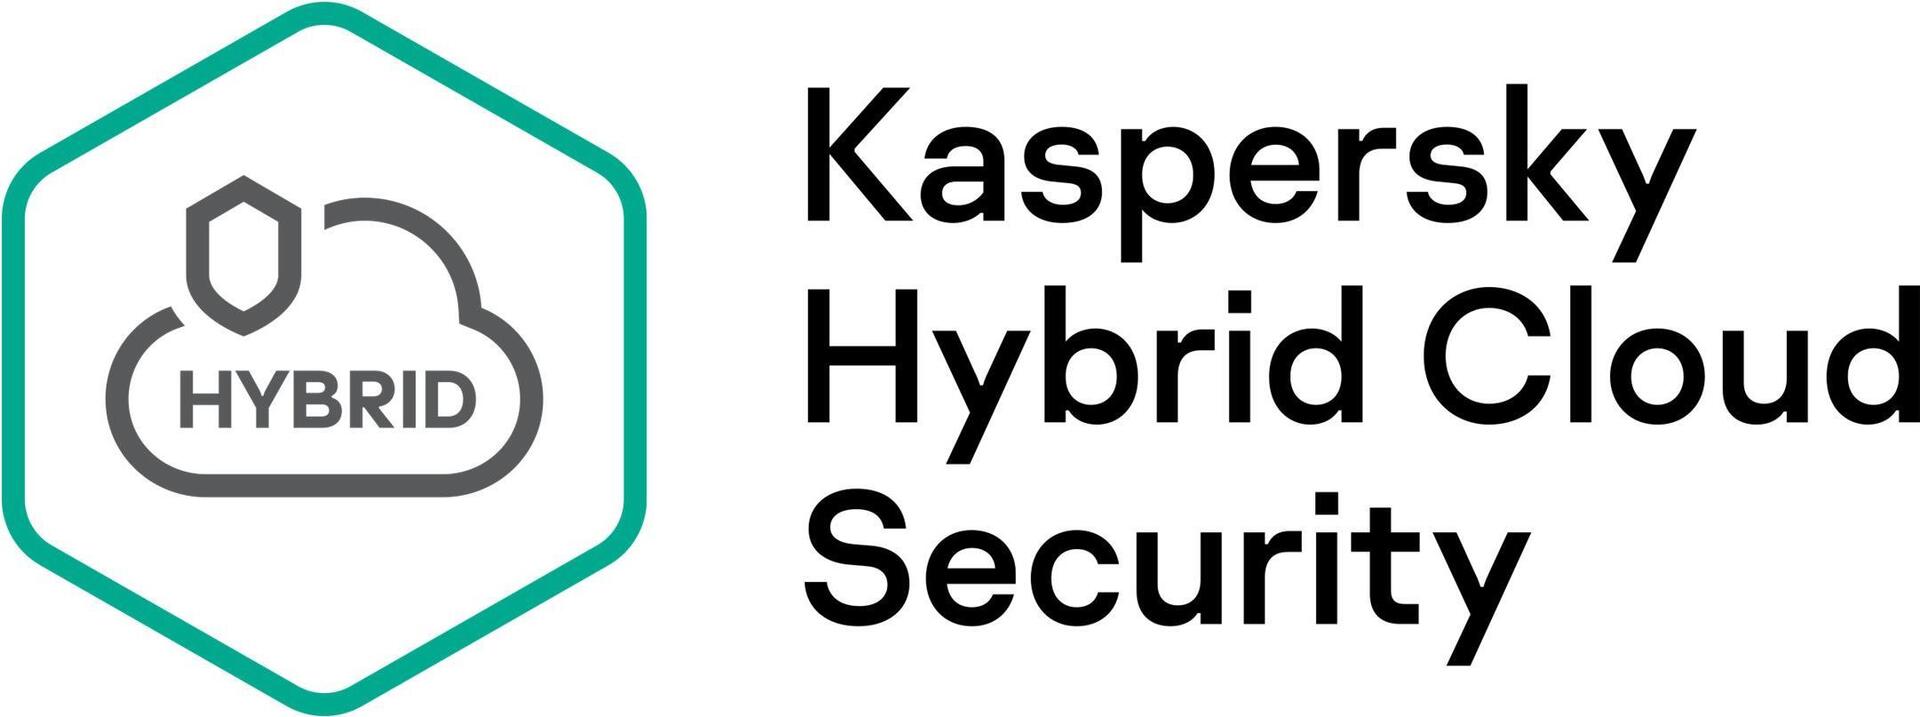 Kaspersky Hybrid Cloud Security Enterprise CPU European Edi. 150-249 CPU 2-Year Base License (KL4553XASDS)